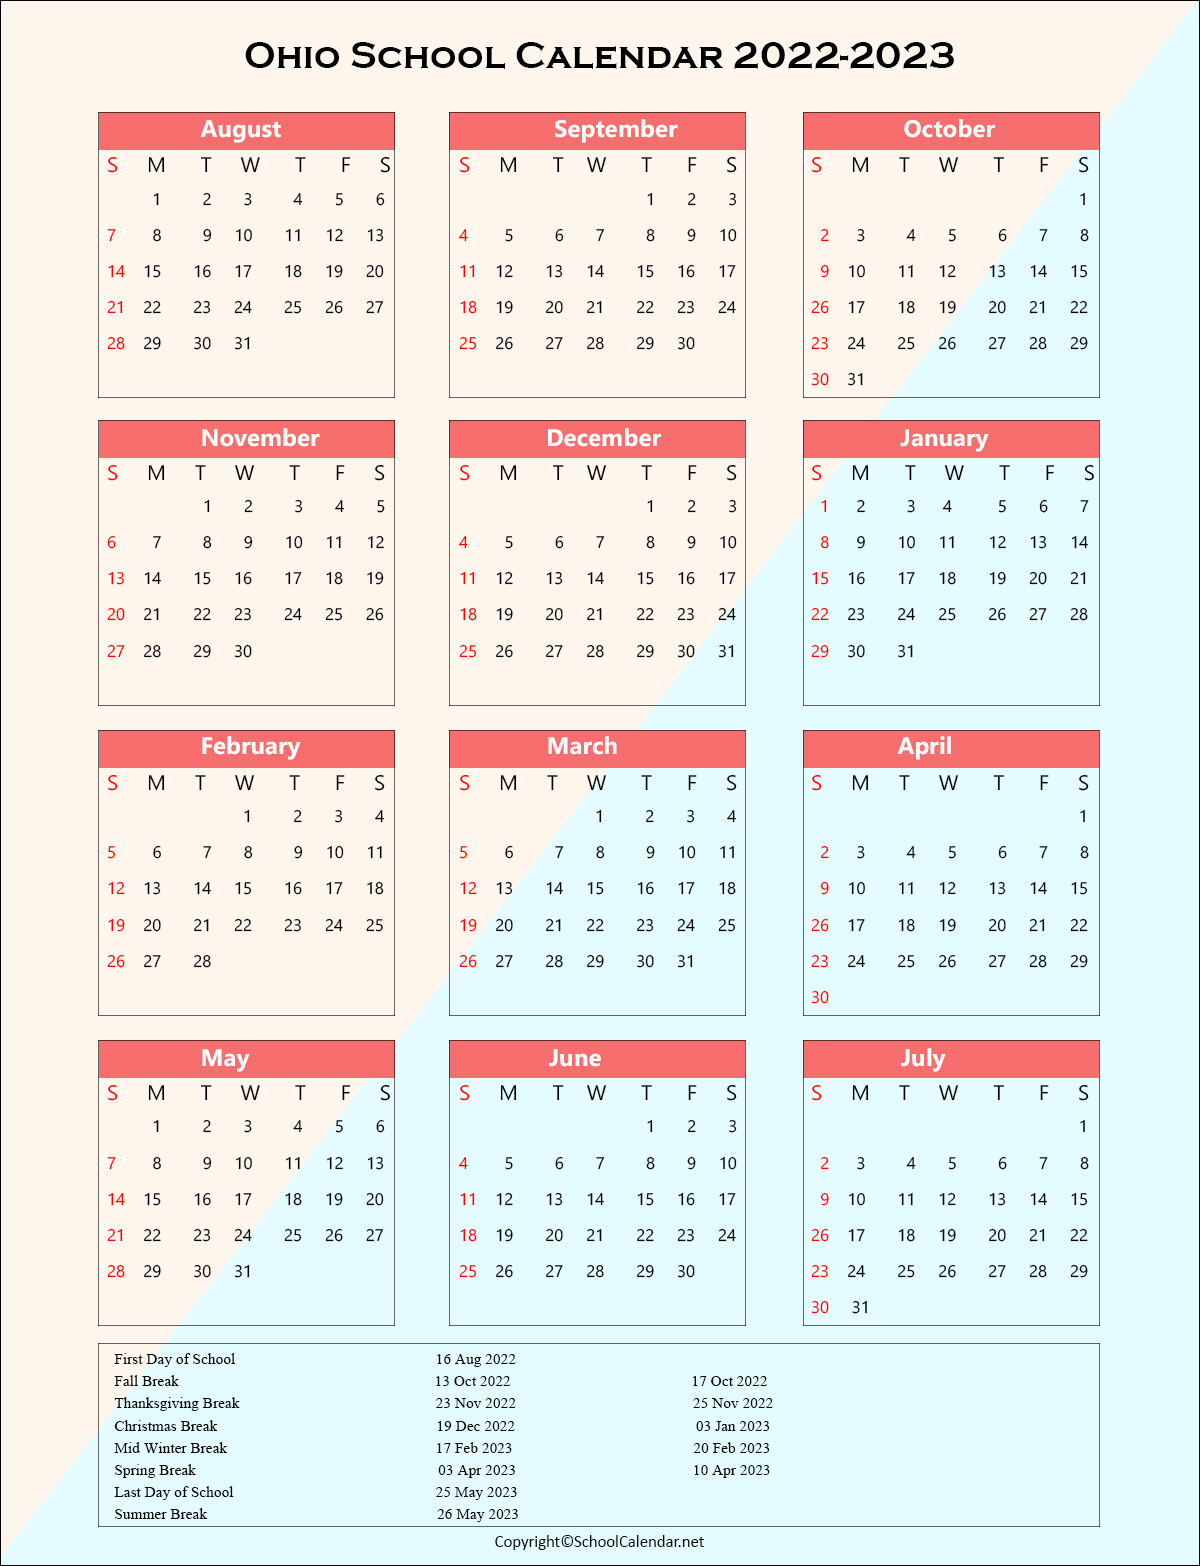 Ohio School Holiday Calendar 2022